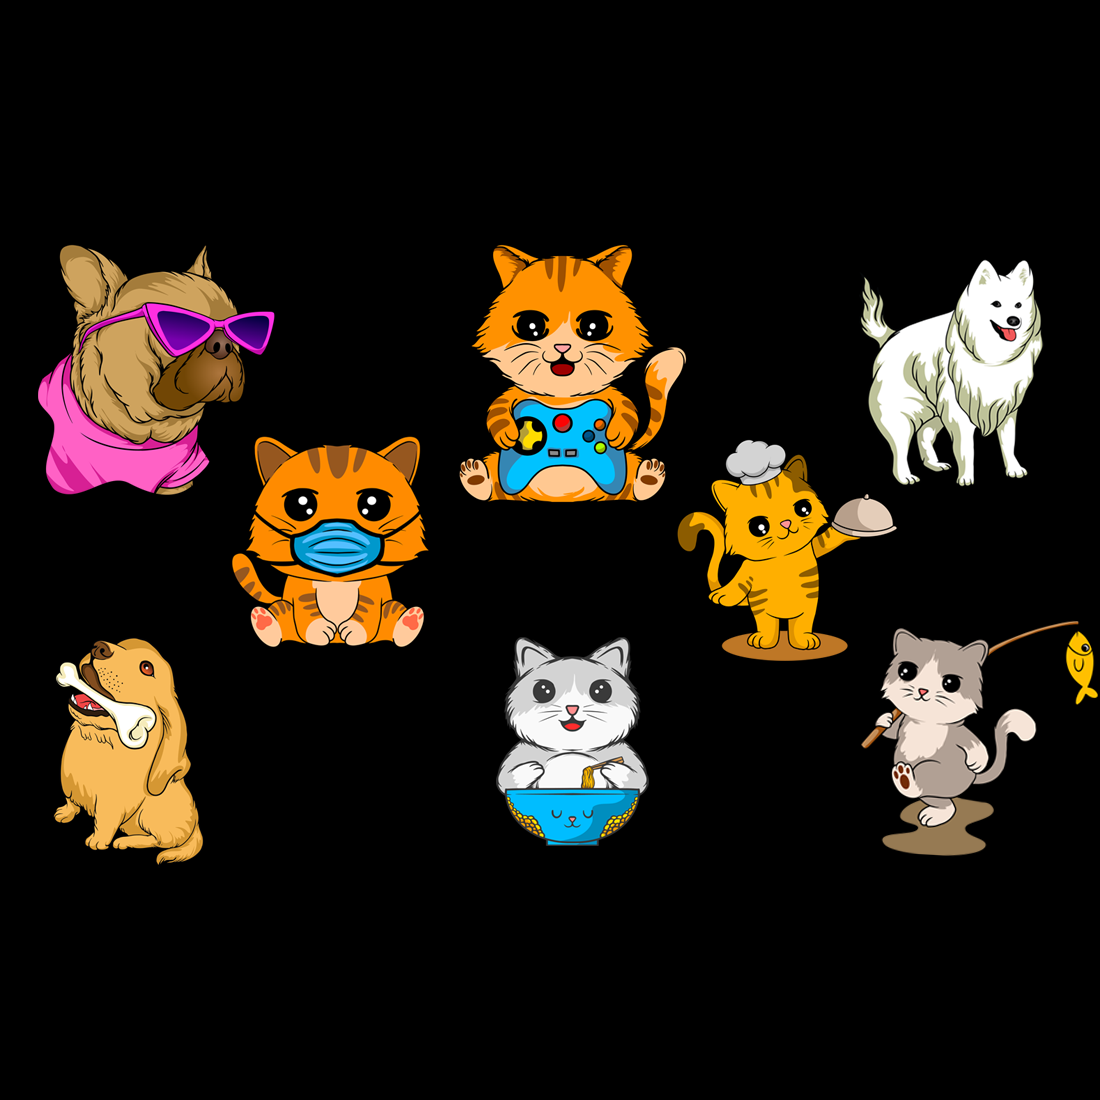 Cat & Dog Master Bundle at 6$ preview image.